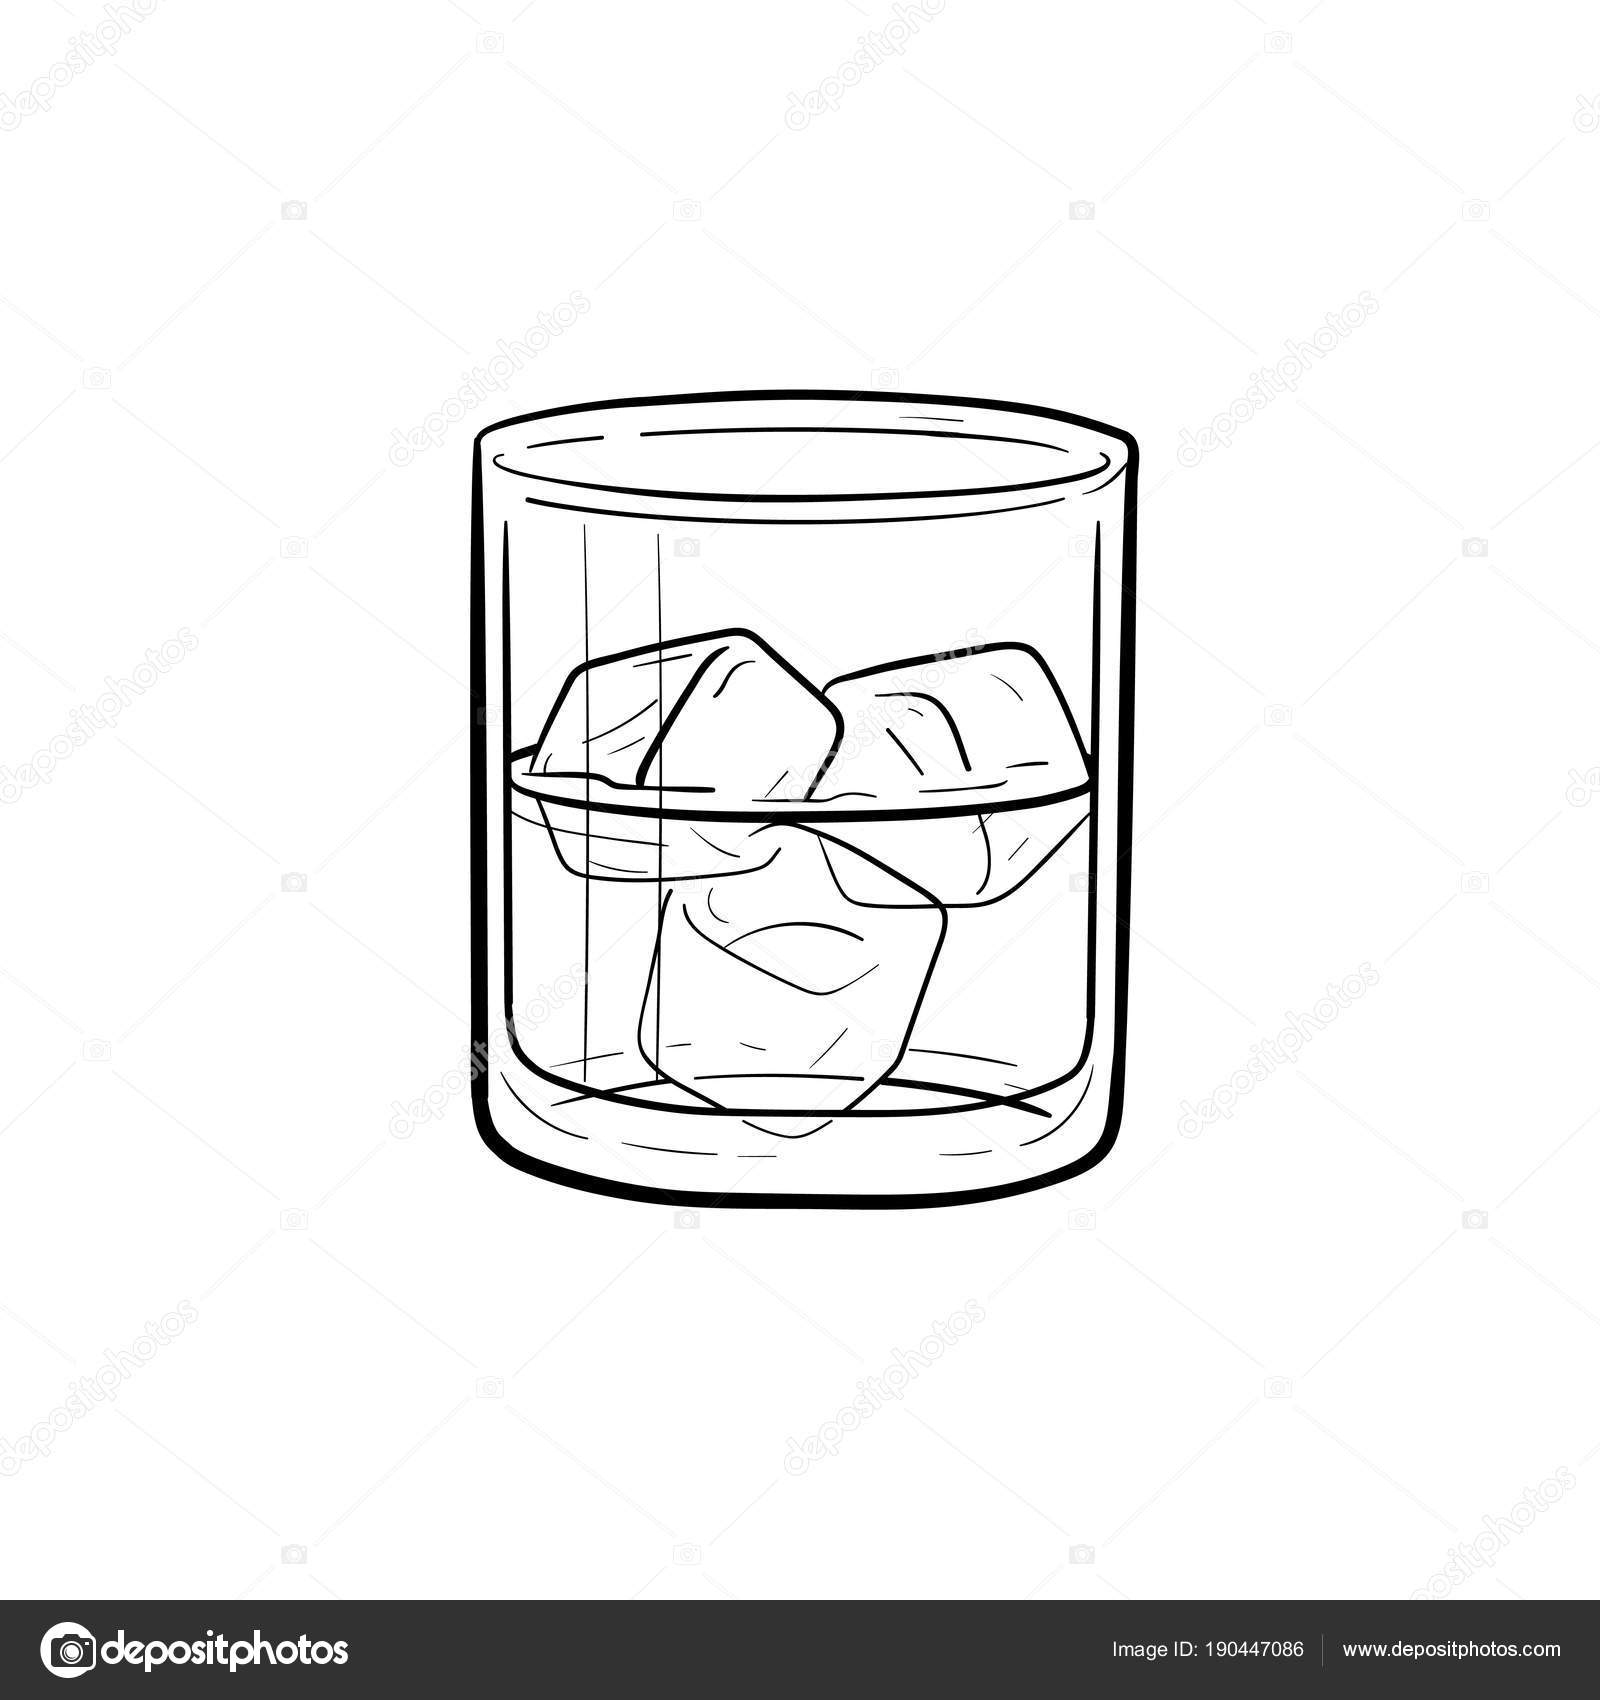 https://st3.depositphotos.com/1001599/19044/v/1600/depositphotos_190447086-stock-illustration-glass-of-water-with-ice.jpg